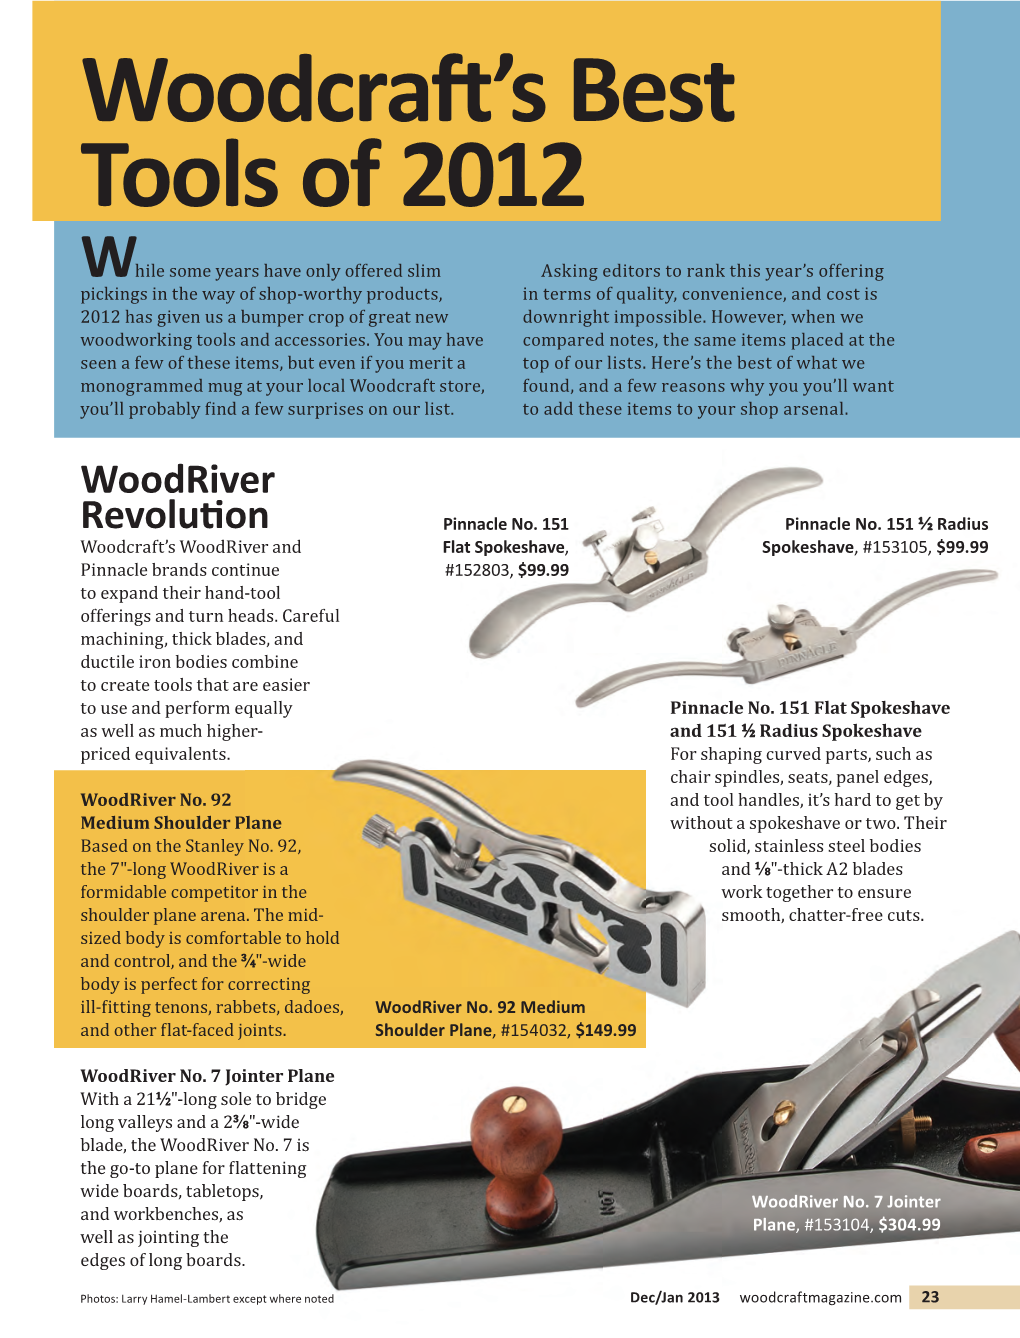 Woodcraft's Best Tools of 2012